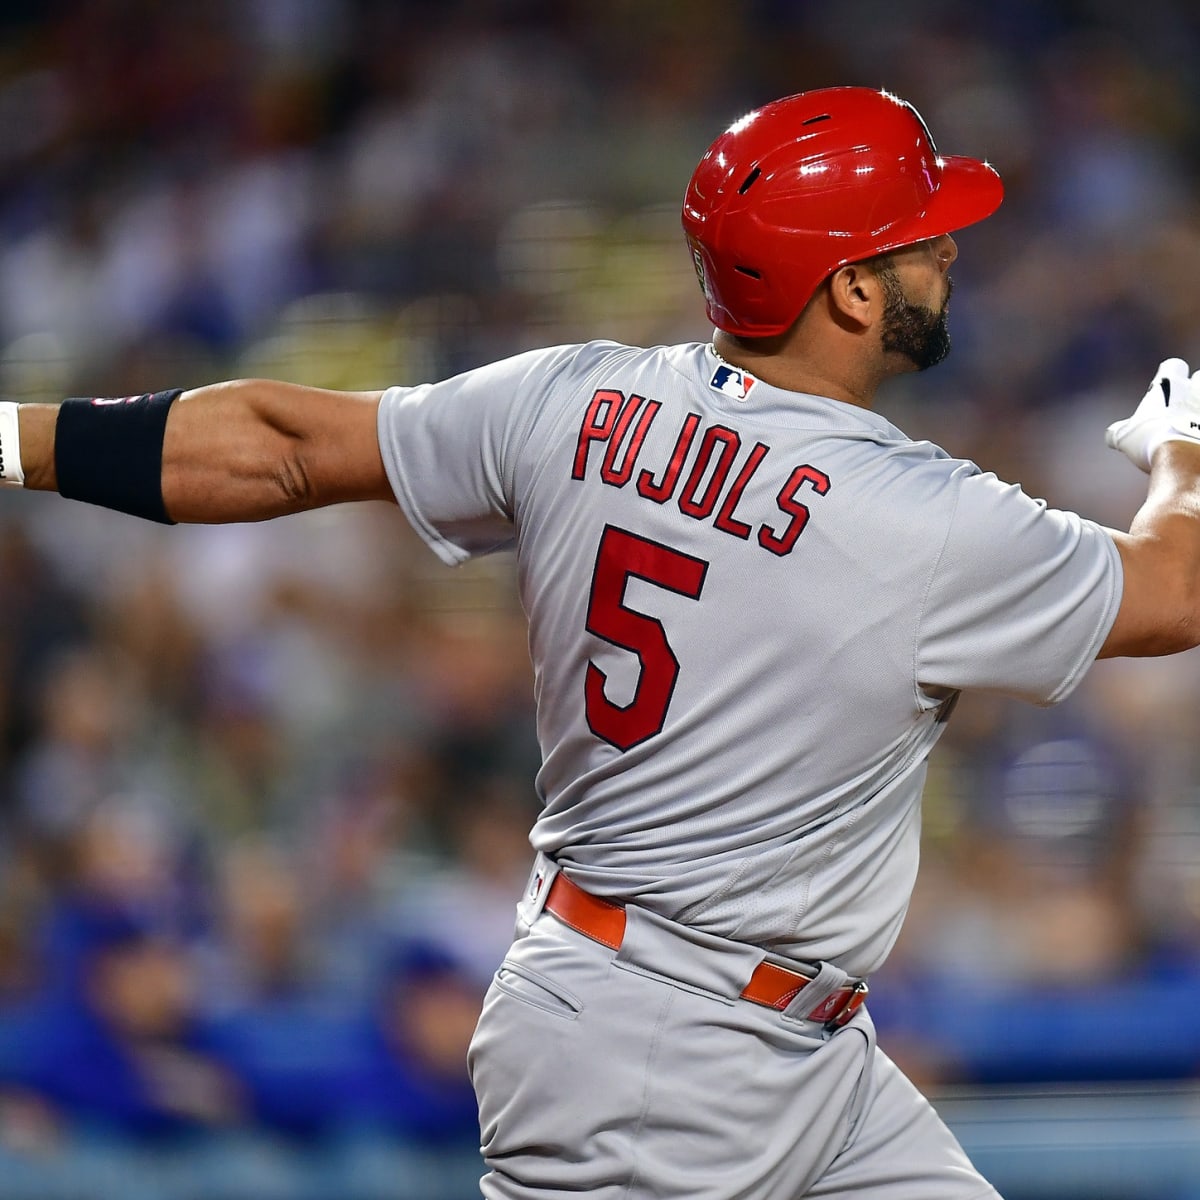 St. Louis Cardinals slugger Albert Pujols chases 700 home run